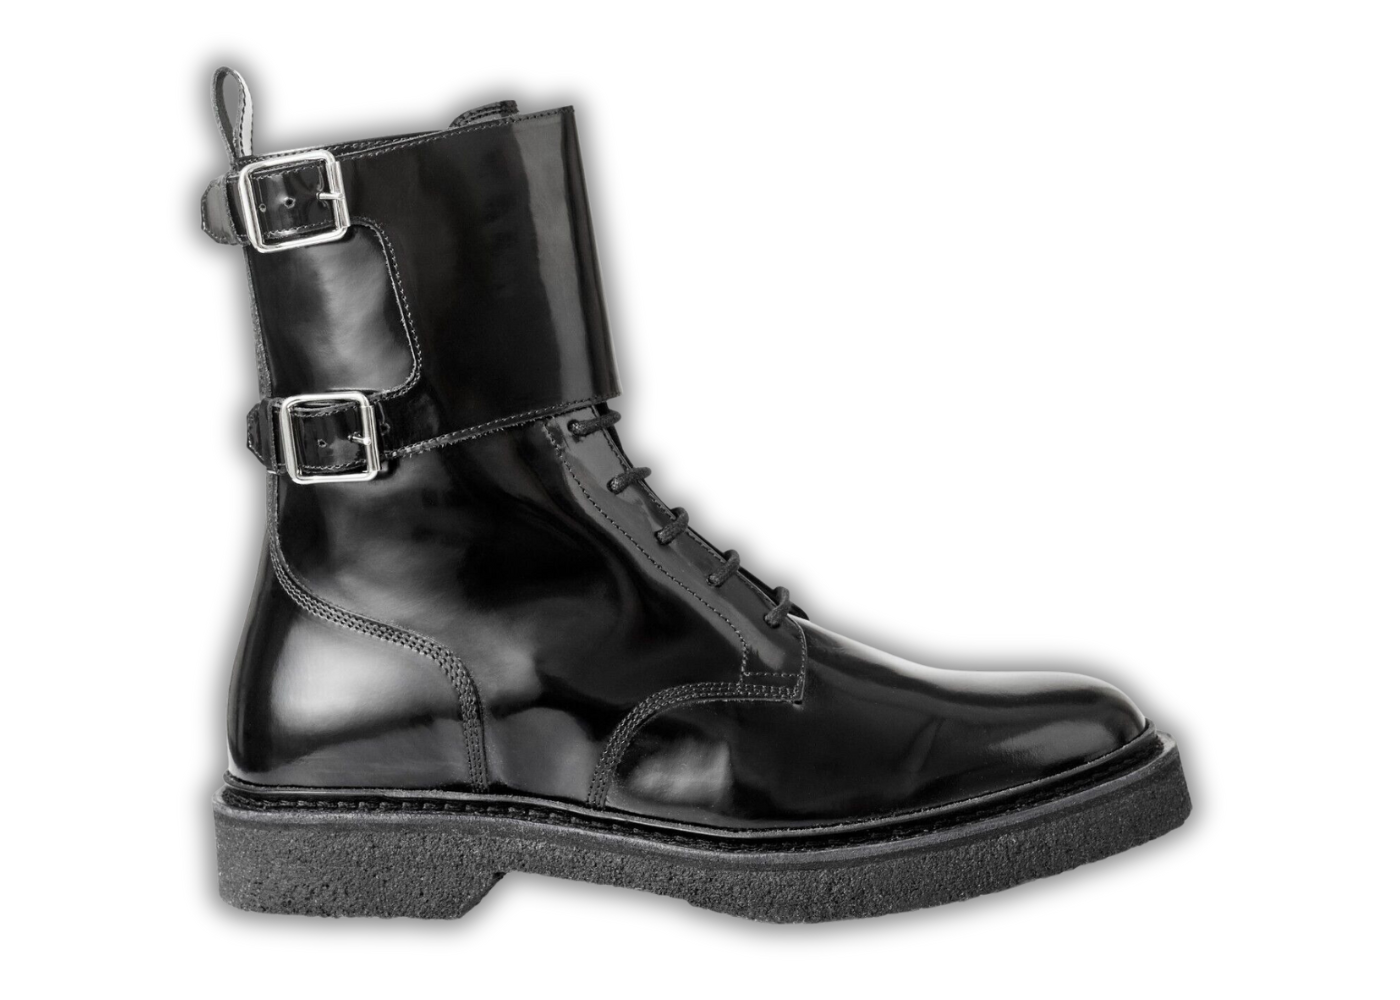 Balmain x H&M Black Patent Leather Boots